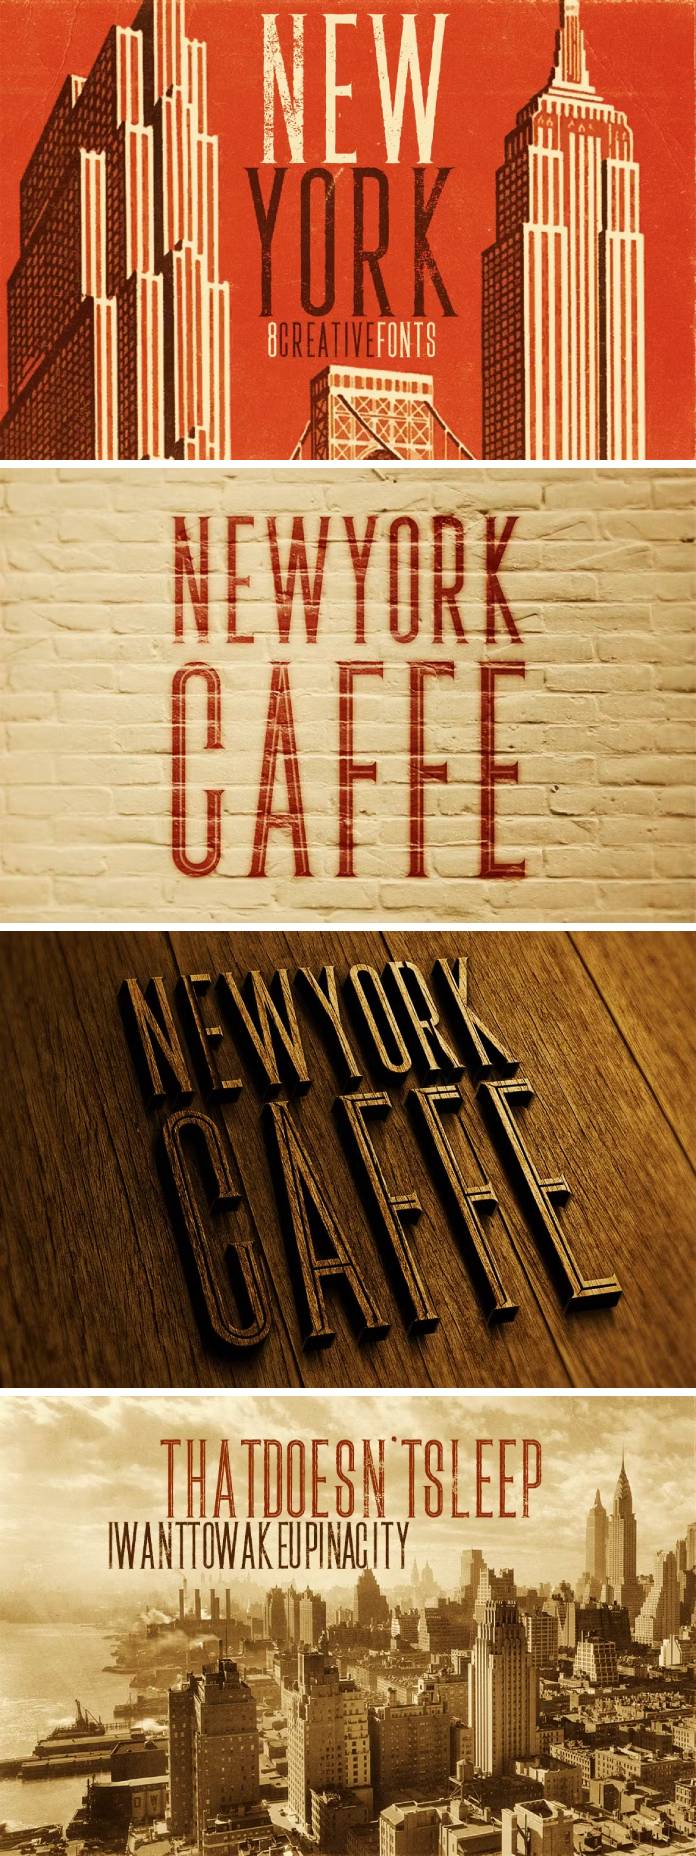 New York Vintage Font by Cruzine